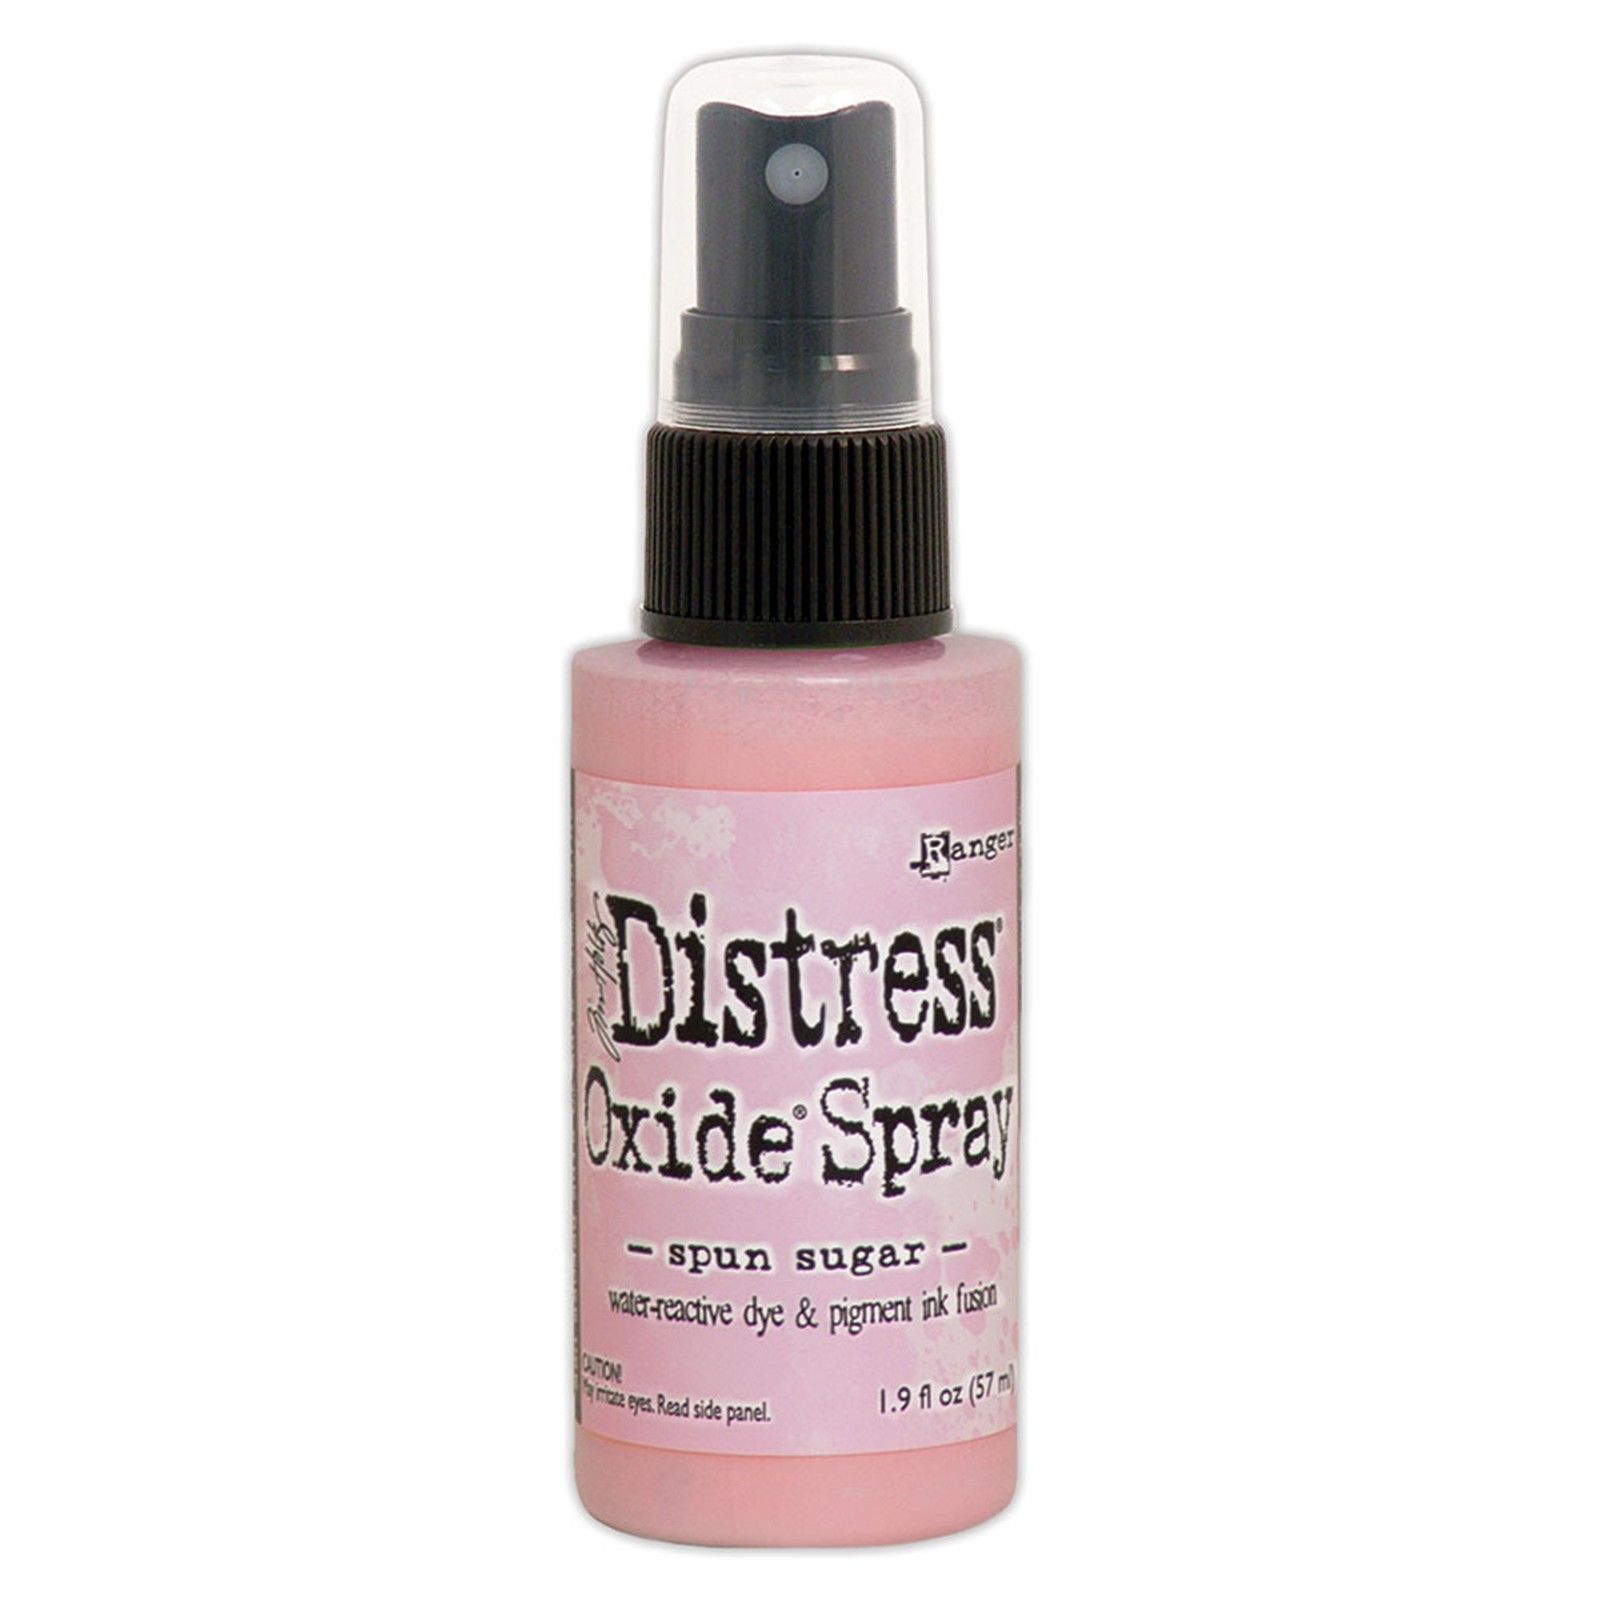 Tim Holtz Distress Oxide Spray 1.9fl oz - Spun Sugar